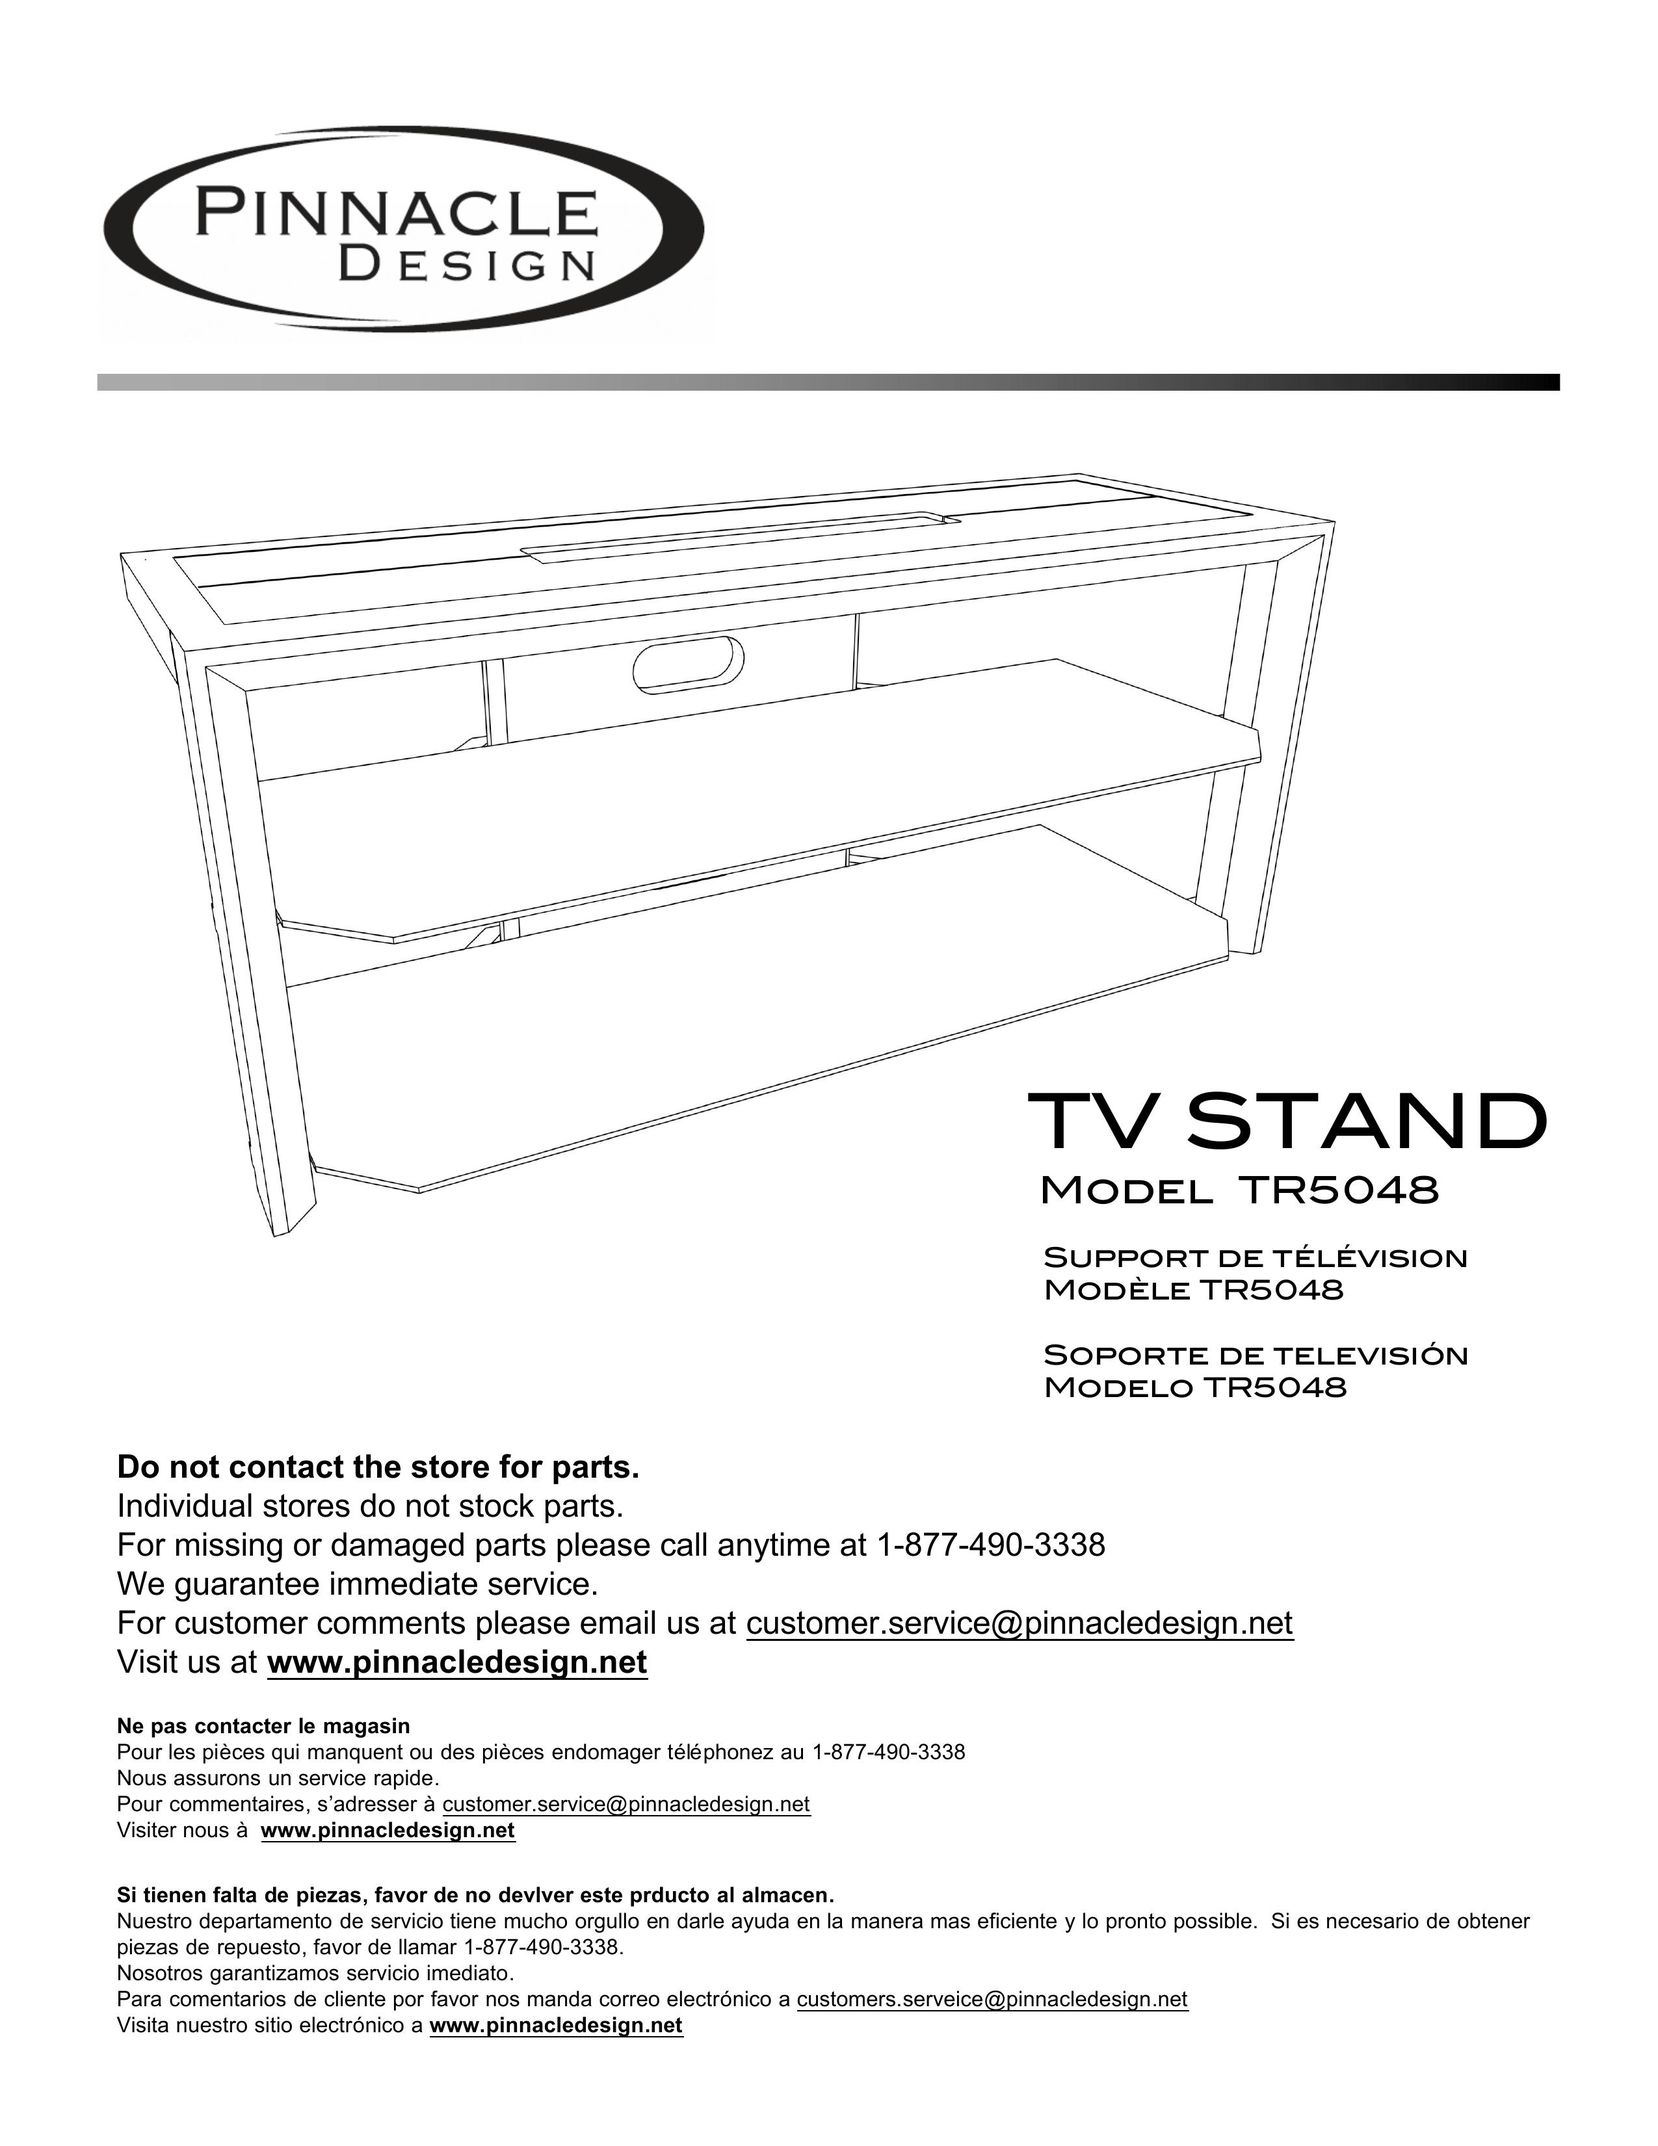 Pinnacle Design TR5048 TV Video Accessories User Manual